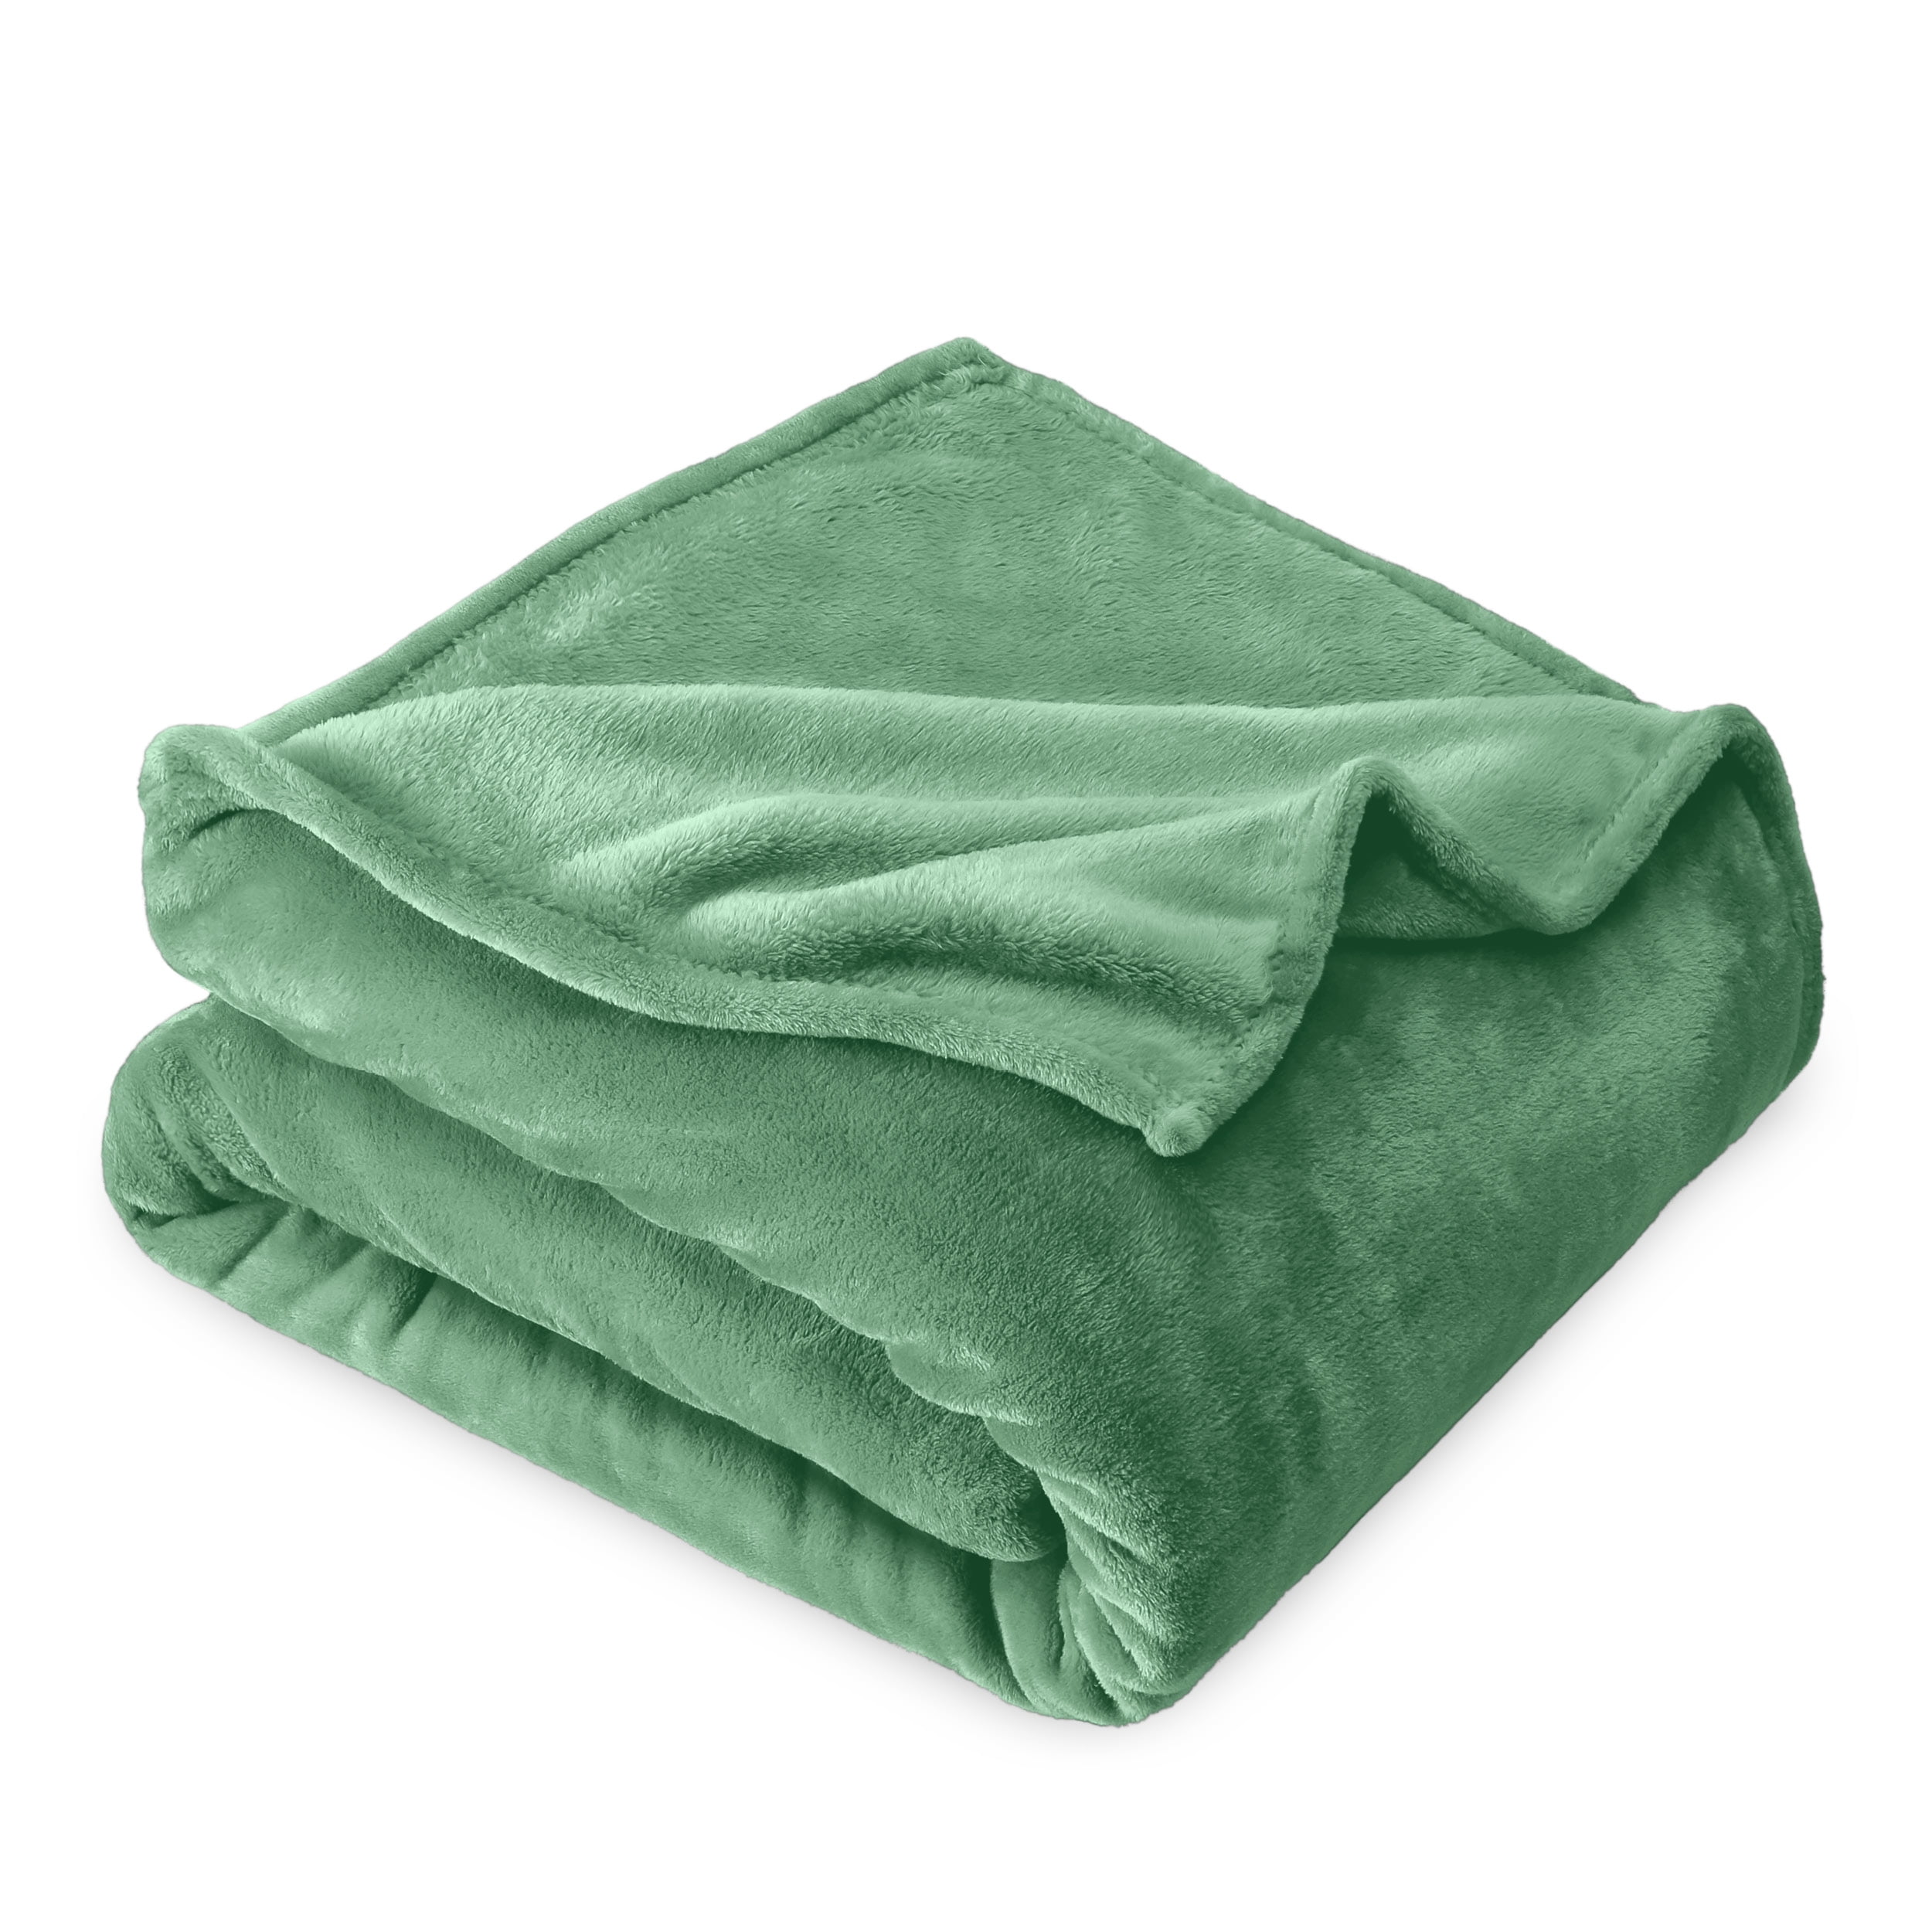 Bare Home Microplush Fleece Blanket - 300 GSM - Fuzzy Microfleece